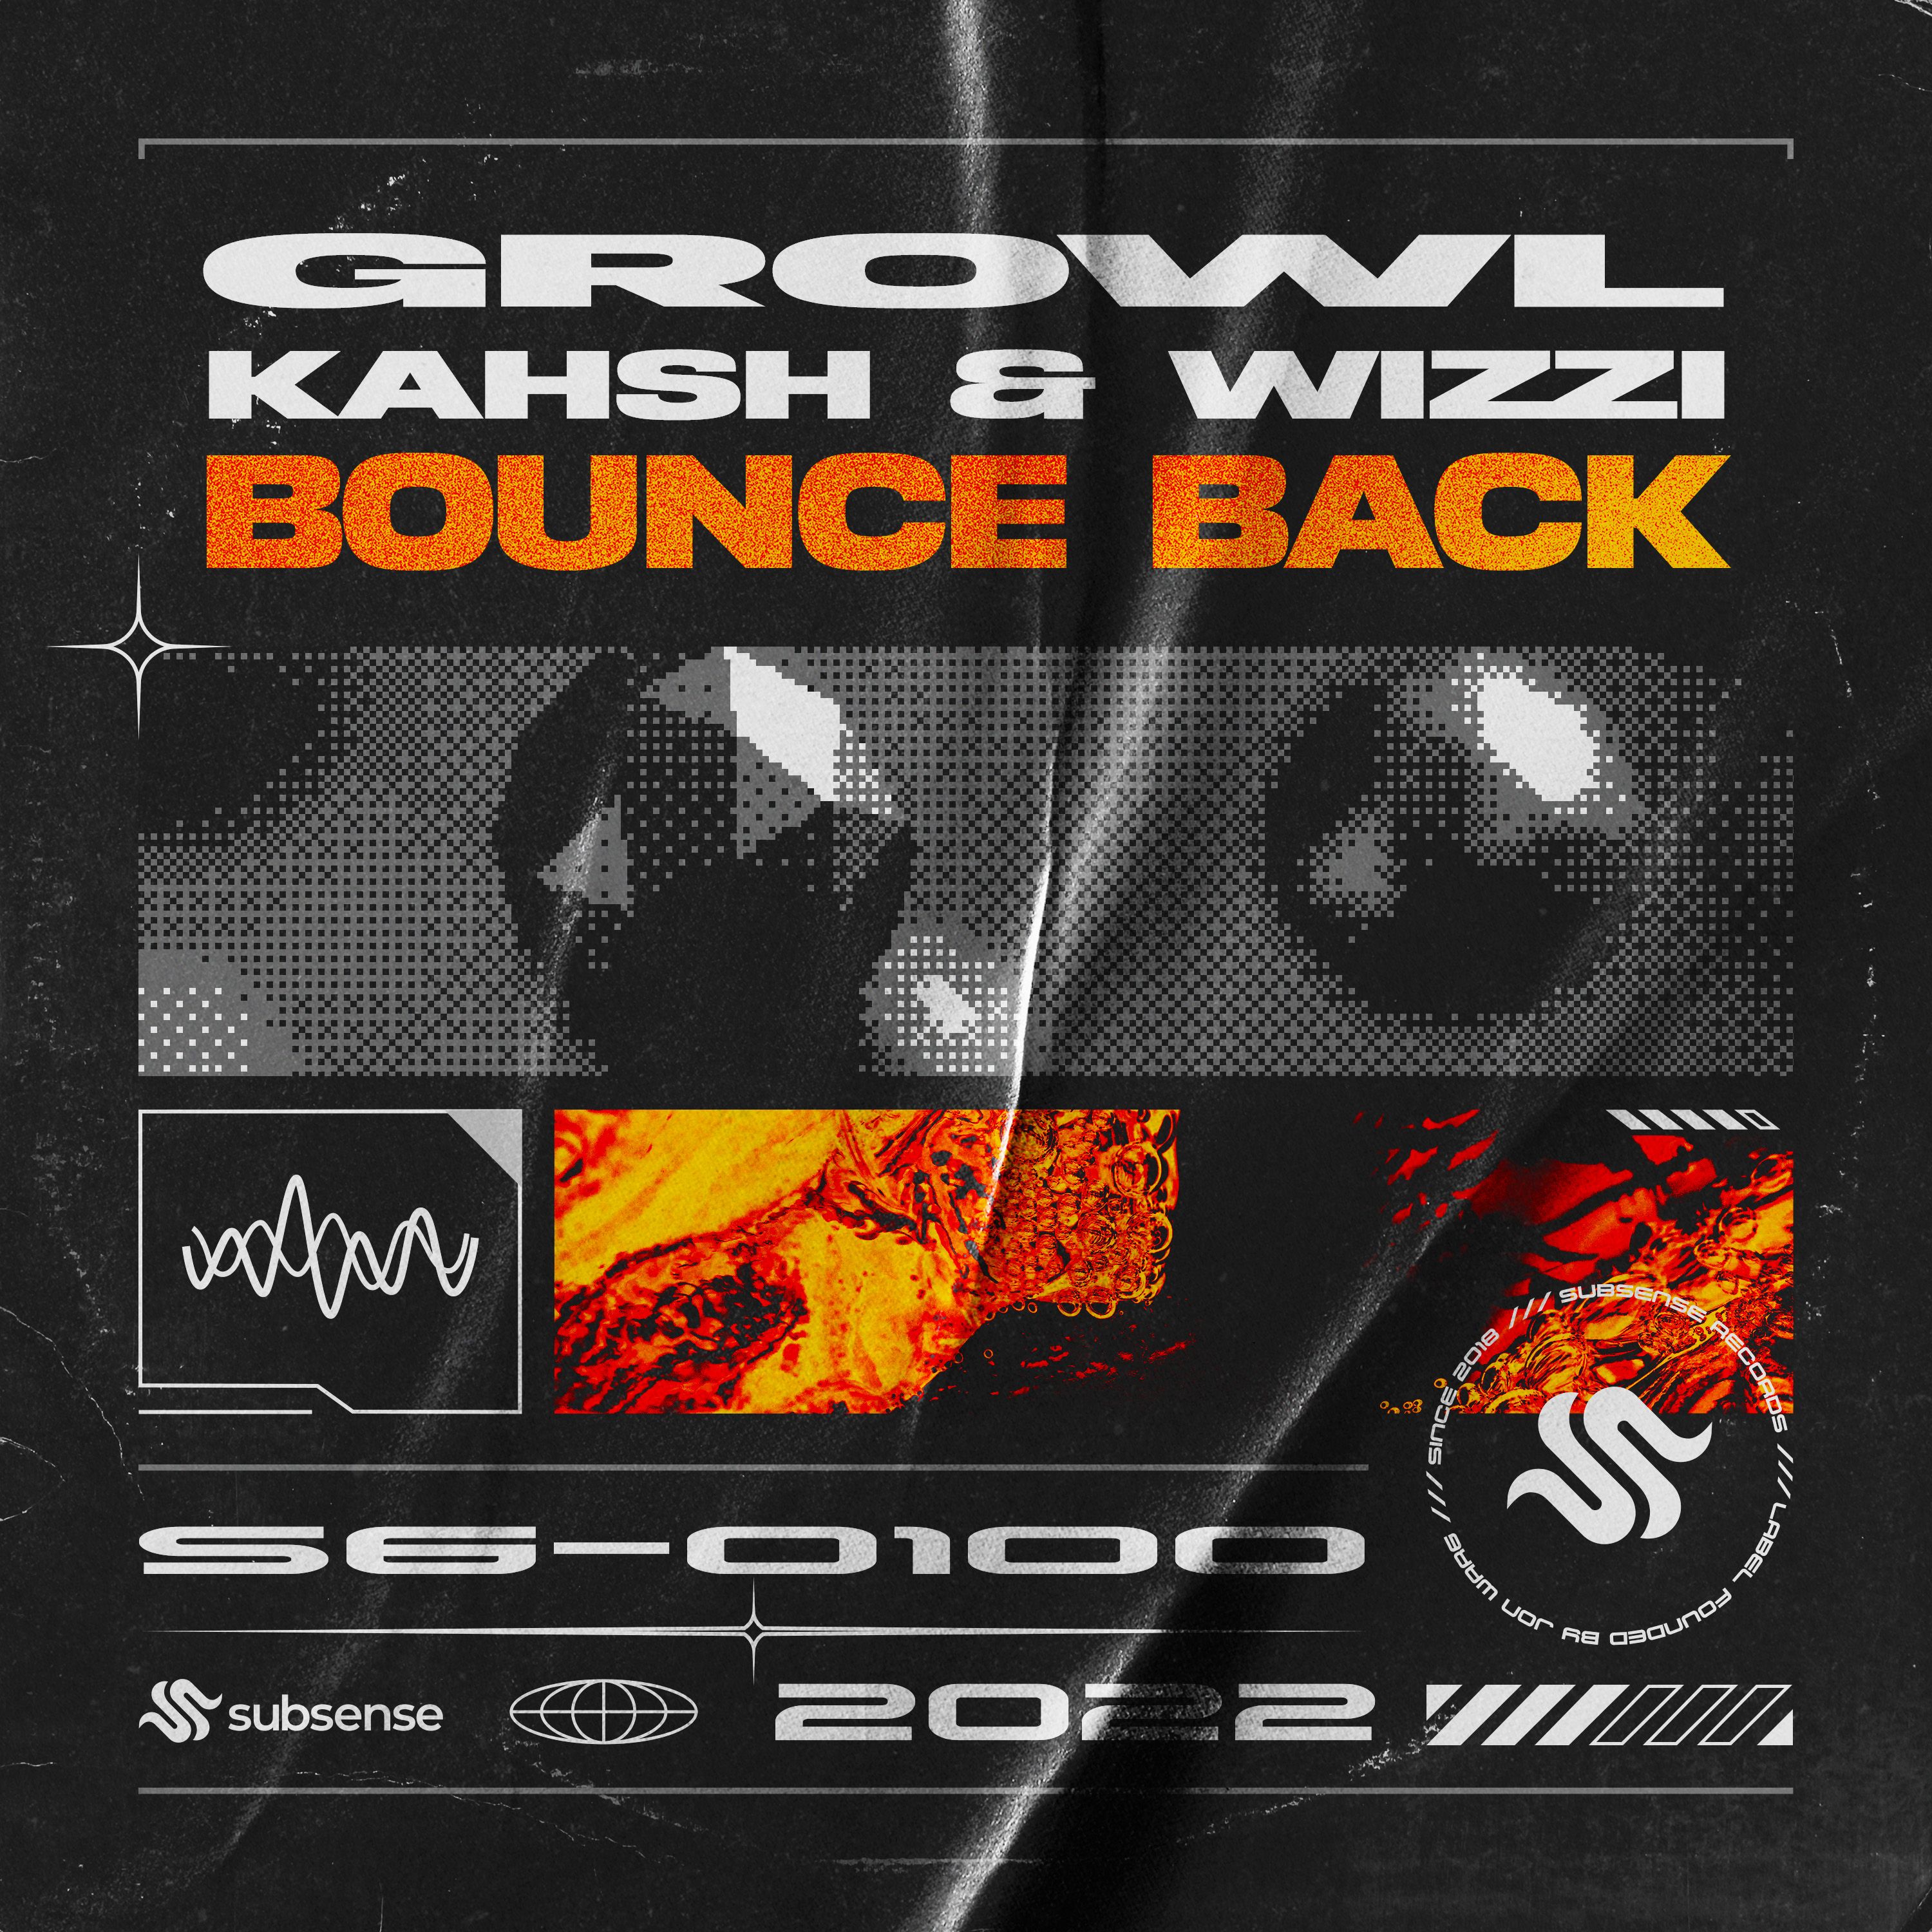 डाउनलोड करा GROWL, KAHSH & Wizzi - Bounce Back (Extended Mix)